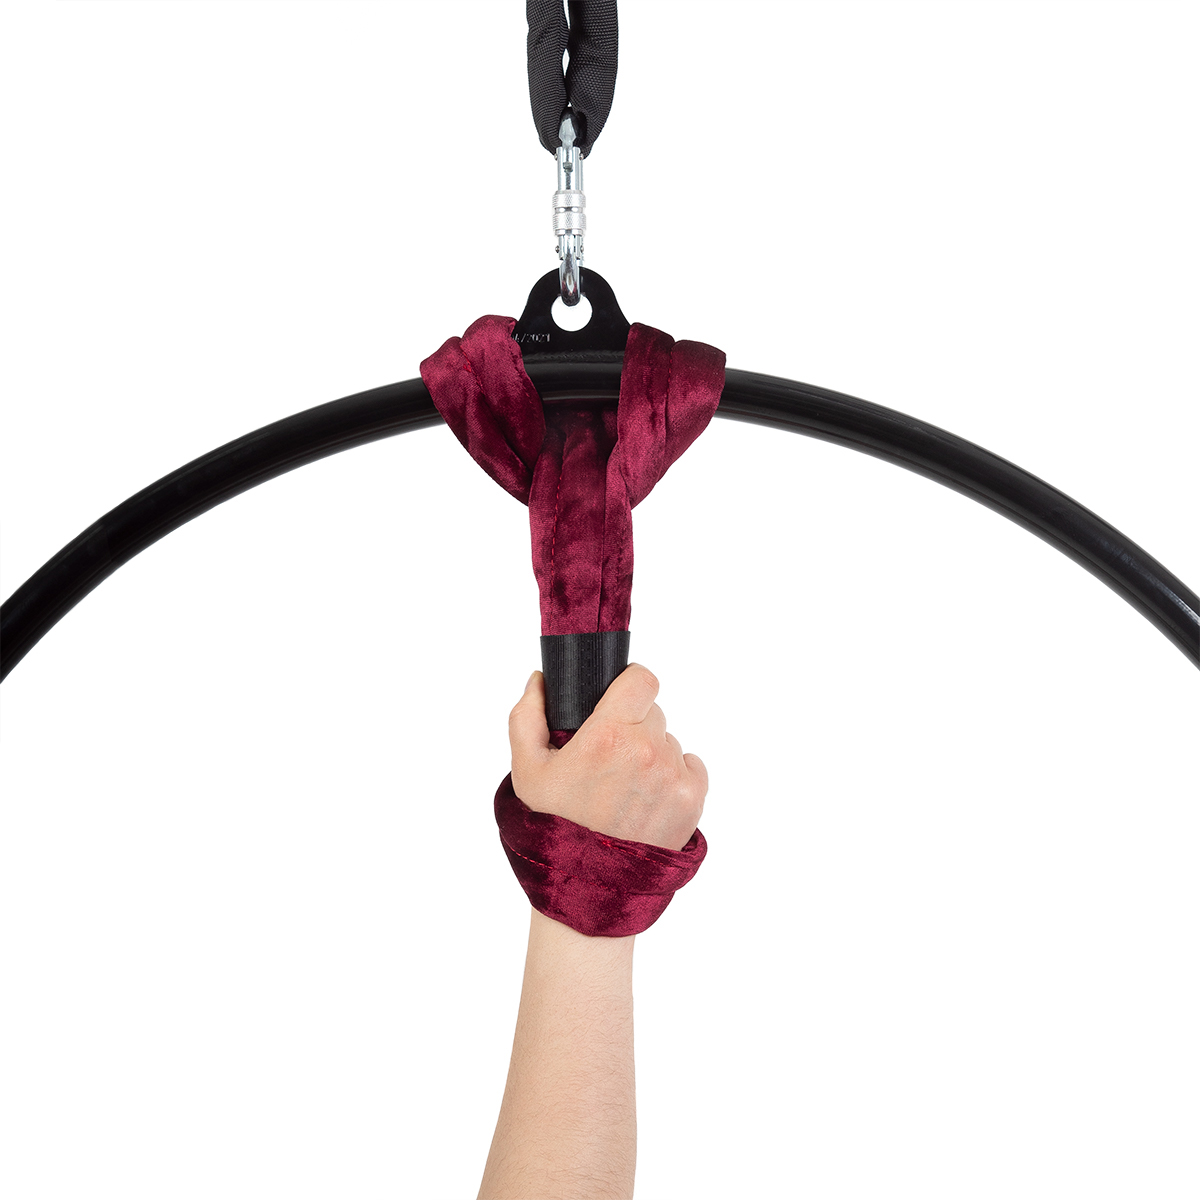 Cotton Hand loop Strap for Aerial Acrobatics